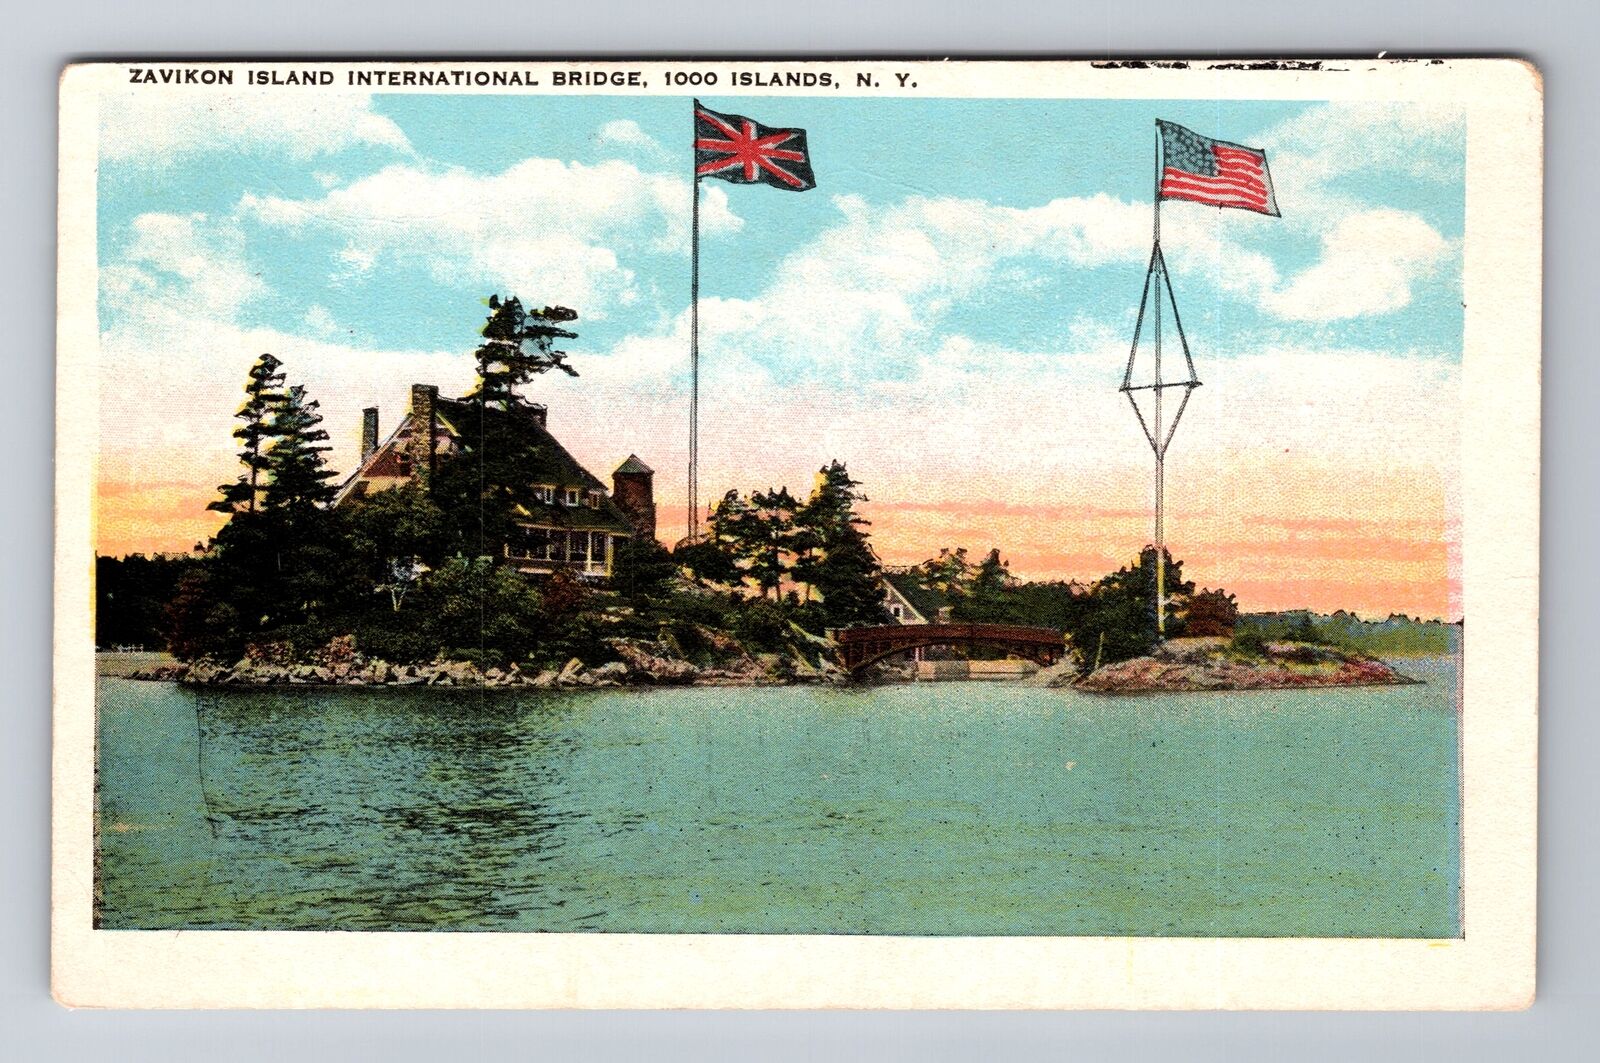 Zavikon Island, NY-New York, 1000 Islands, International Bridge Vintage Postcard